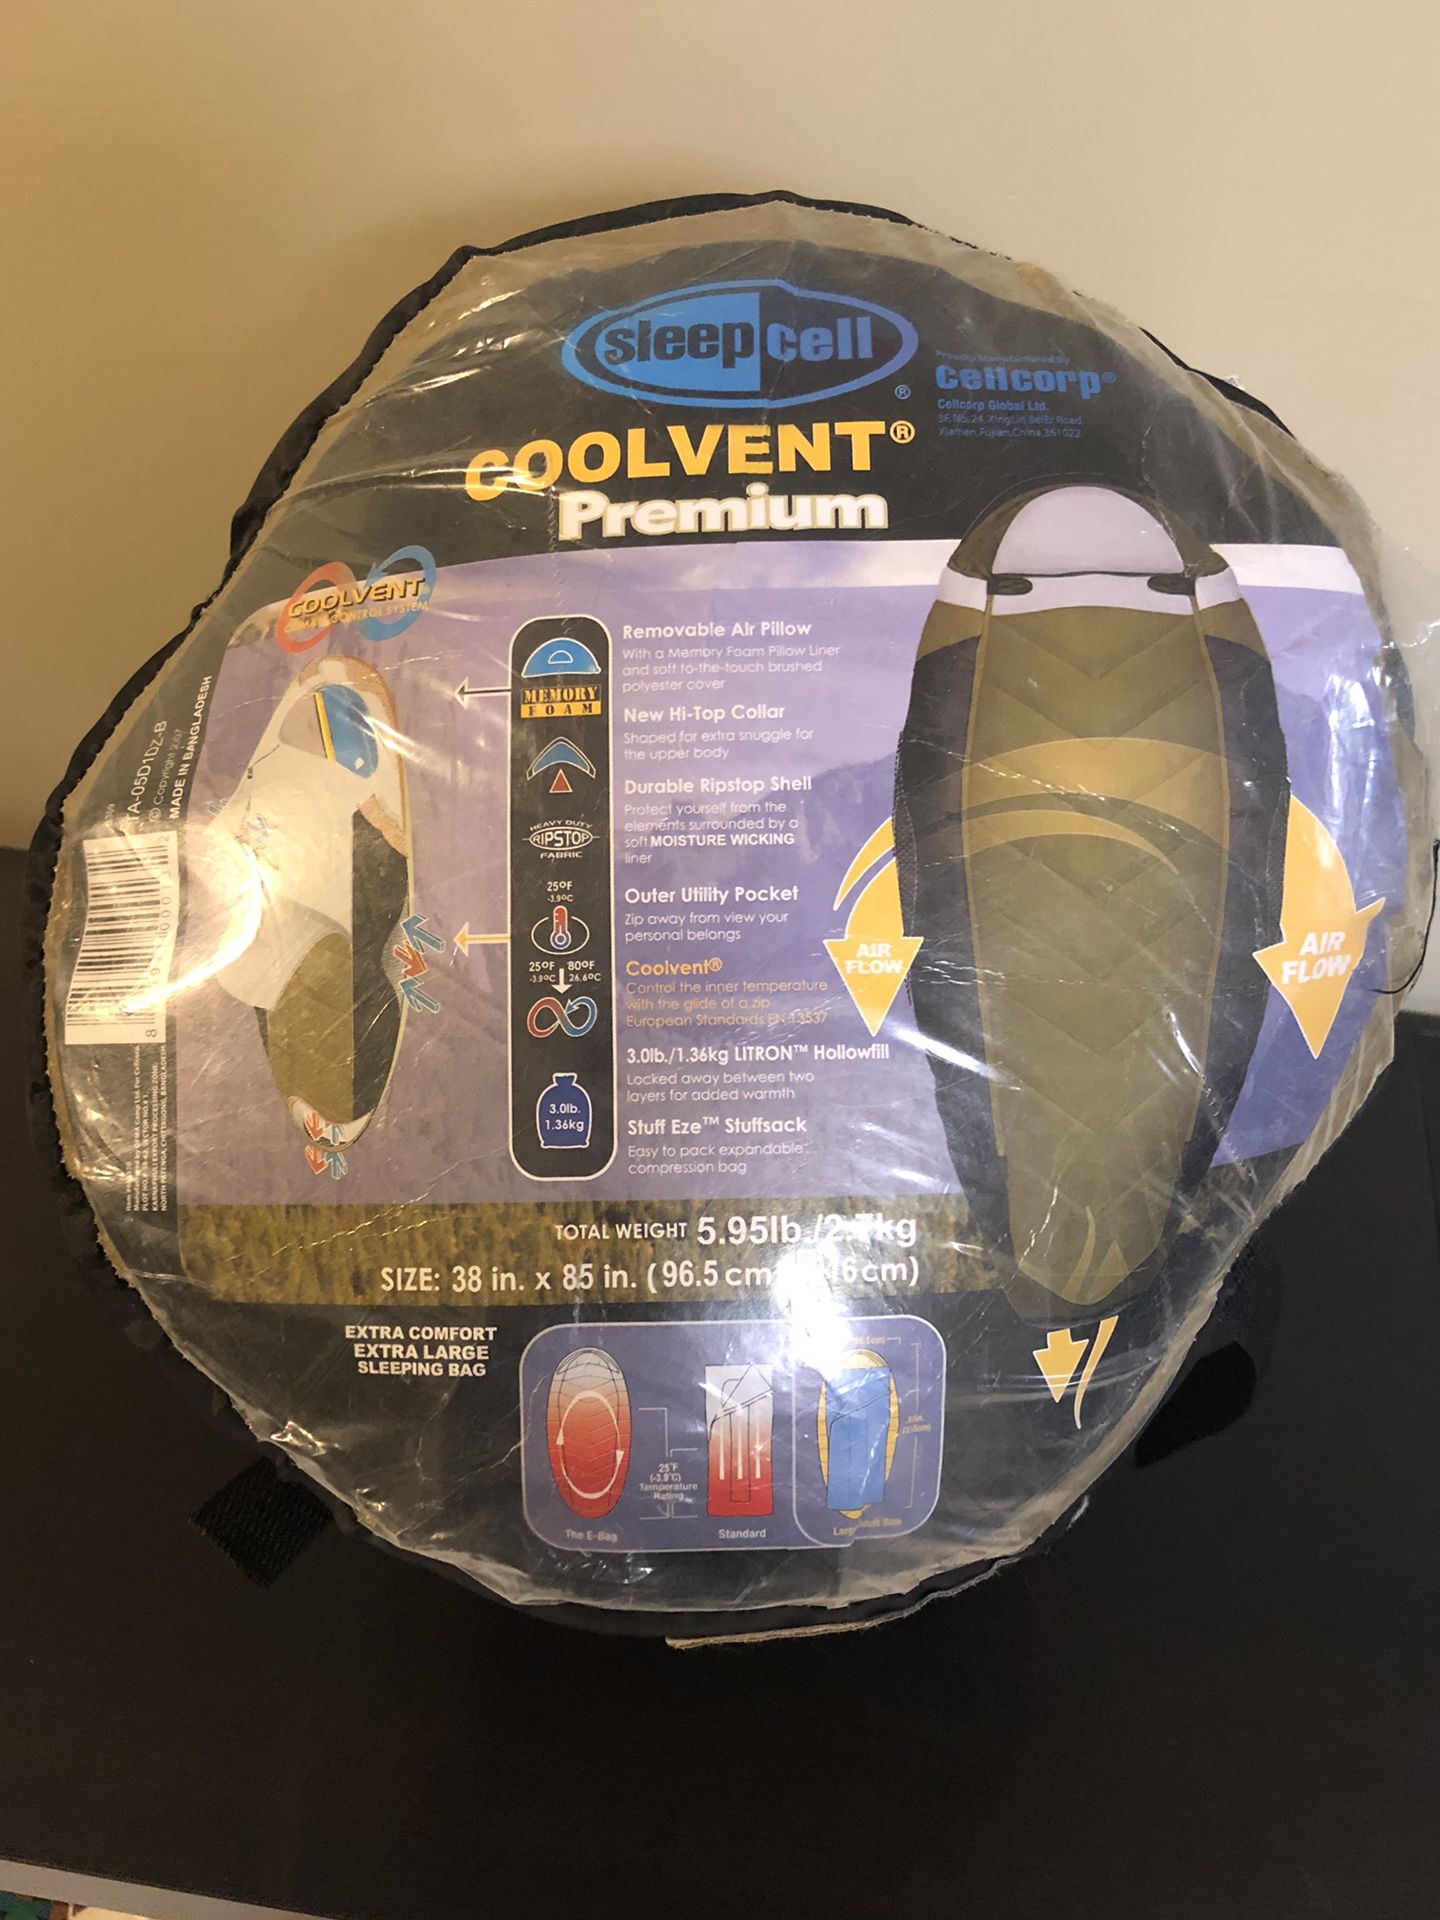 Sleep Cell Coolvent Premium Sleeping Bag